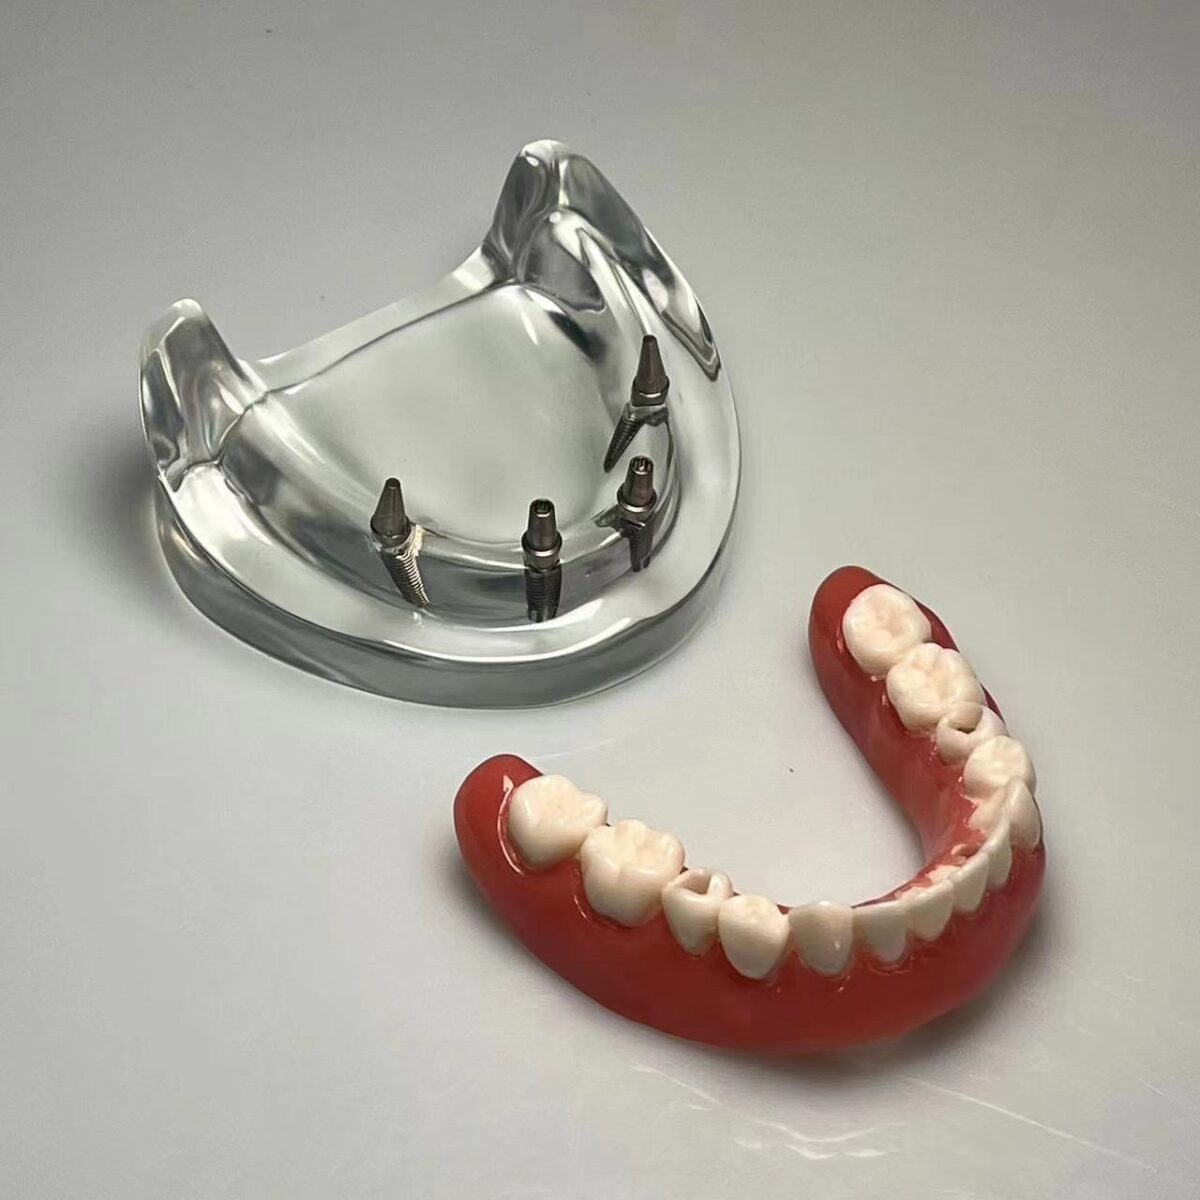 mandilbular implant prosthesis model